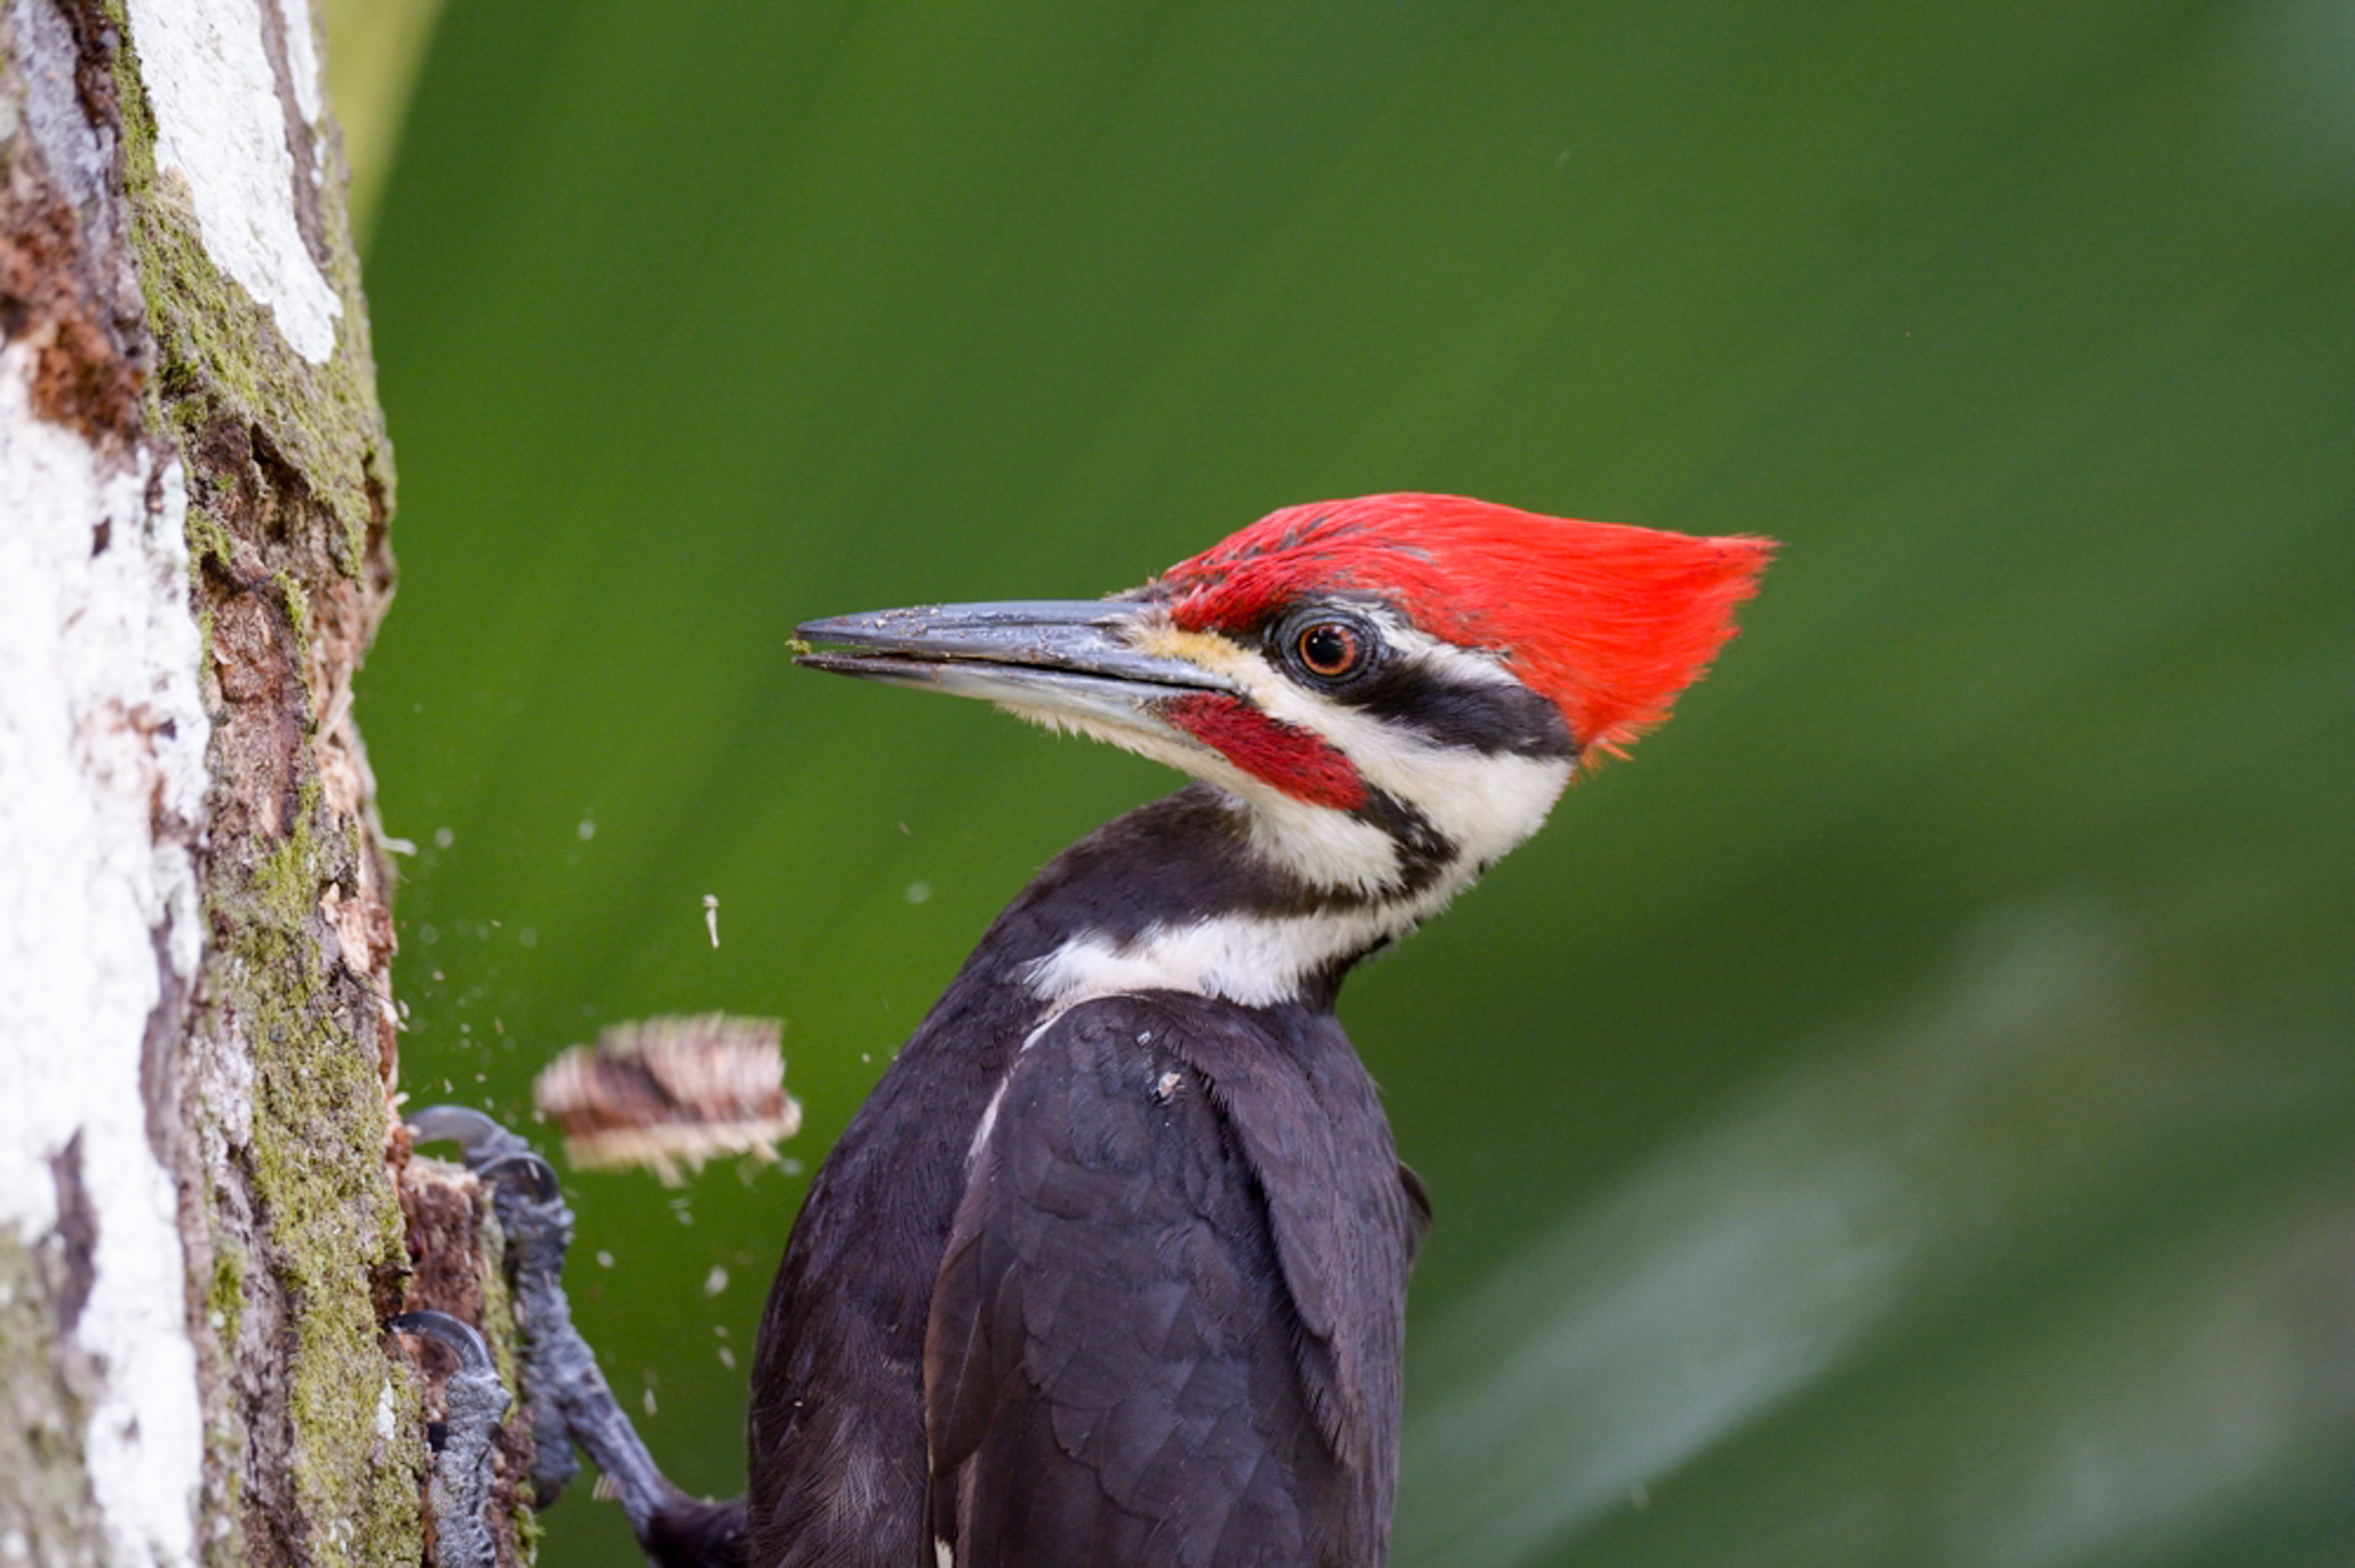 Apa 2015 dennisderby 283589 pileated woodpecker kk web%20ready%20image